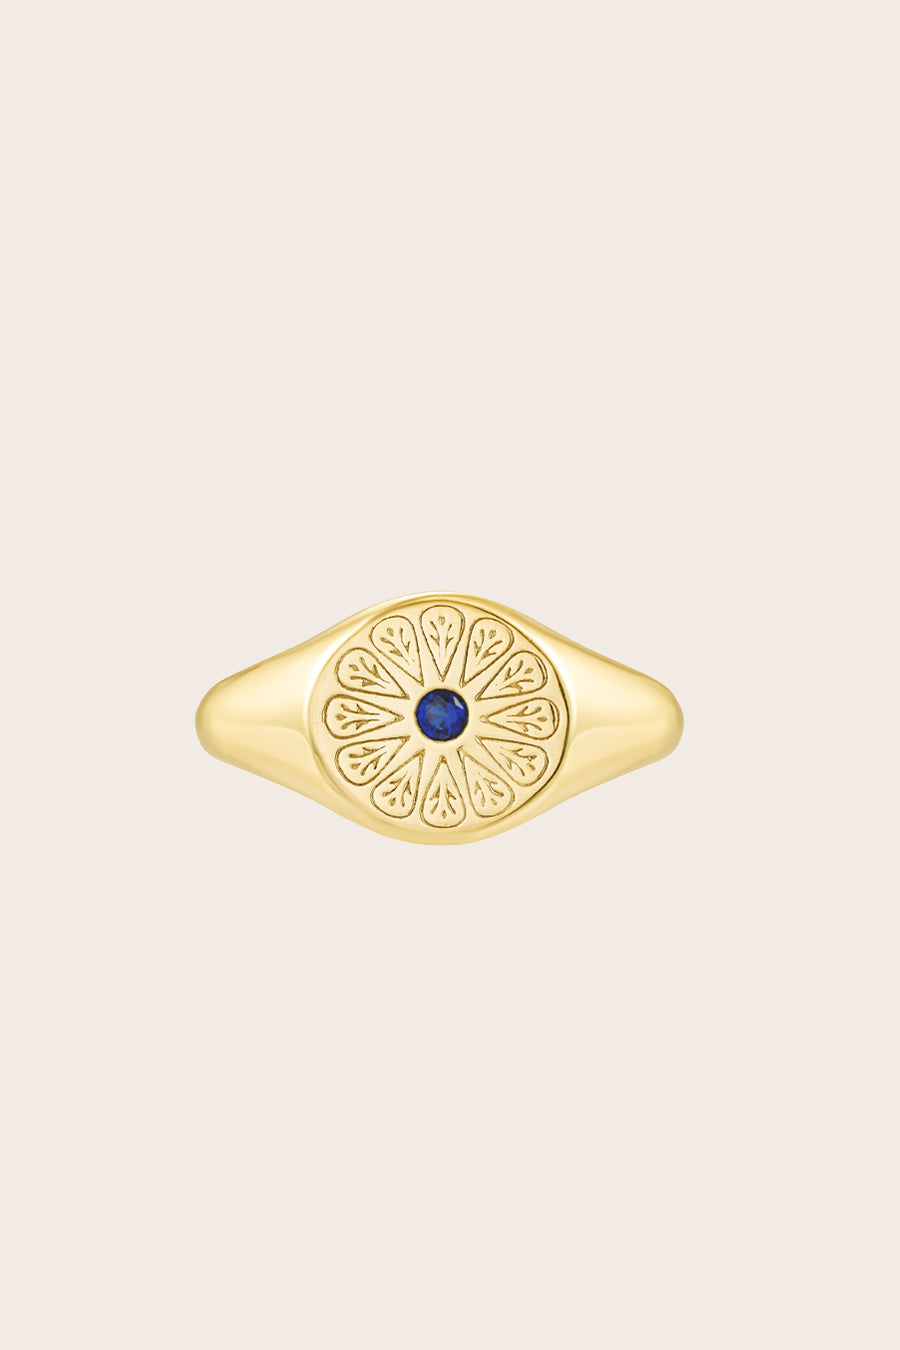 Gold September Sapphire Signet Birthstone Ring on Cream background